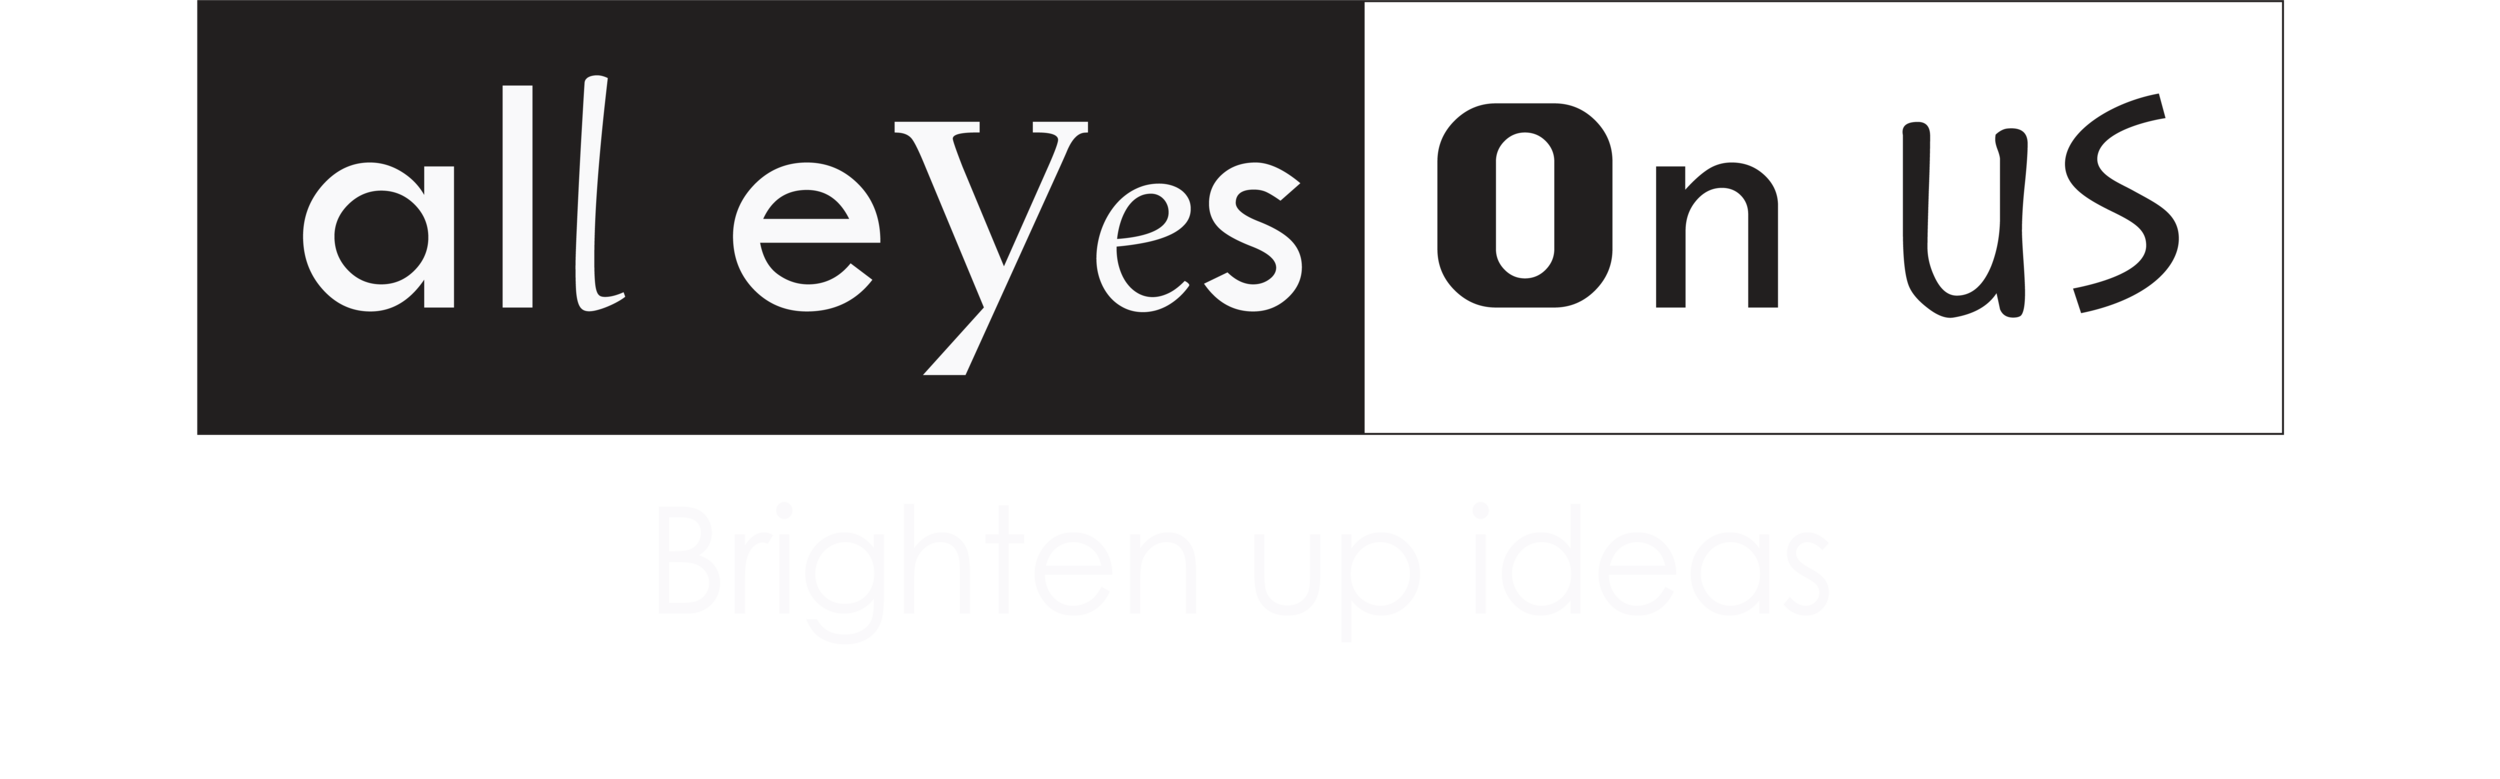 All Eyes On Us Logo com slogan.png